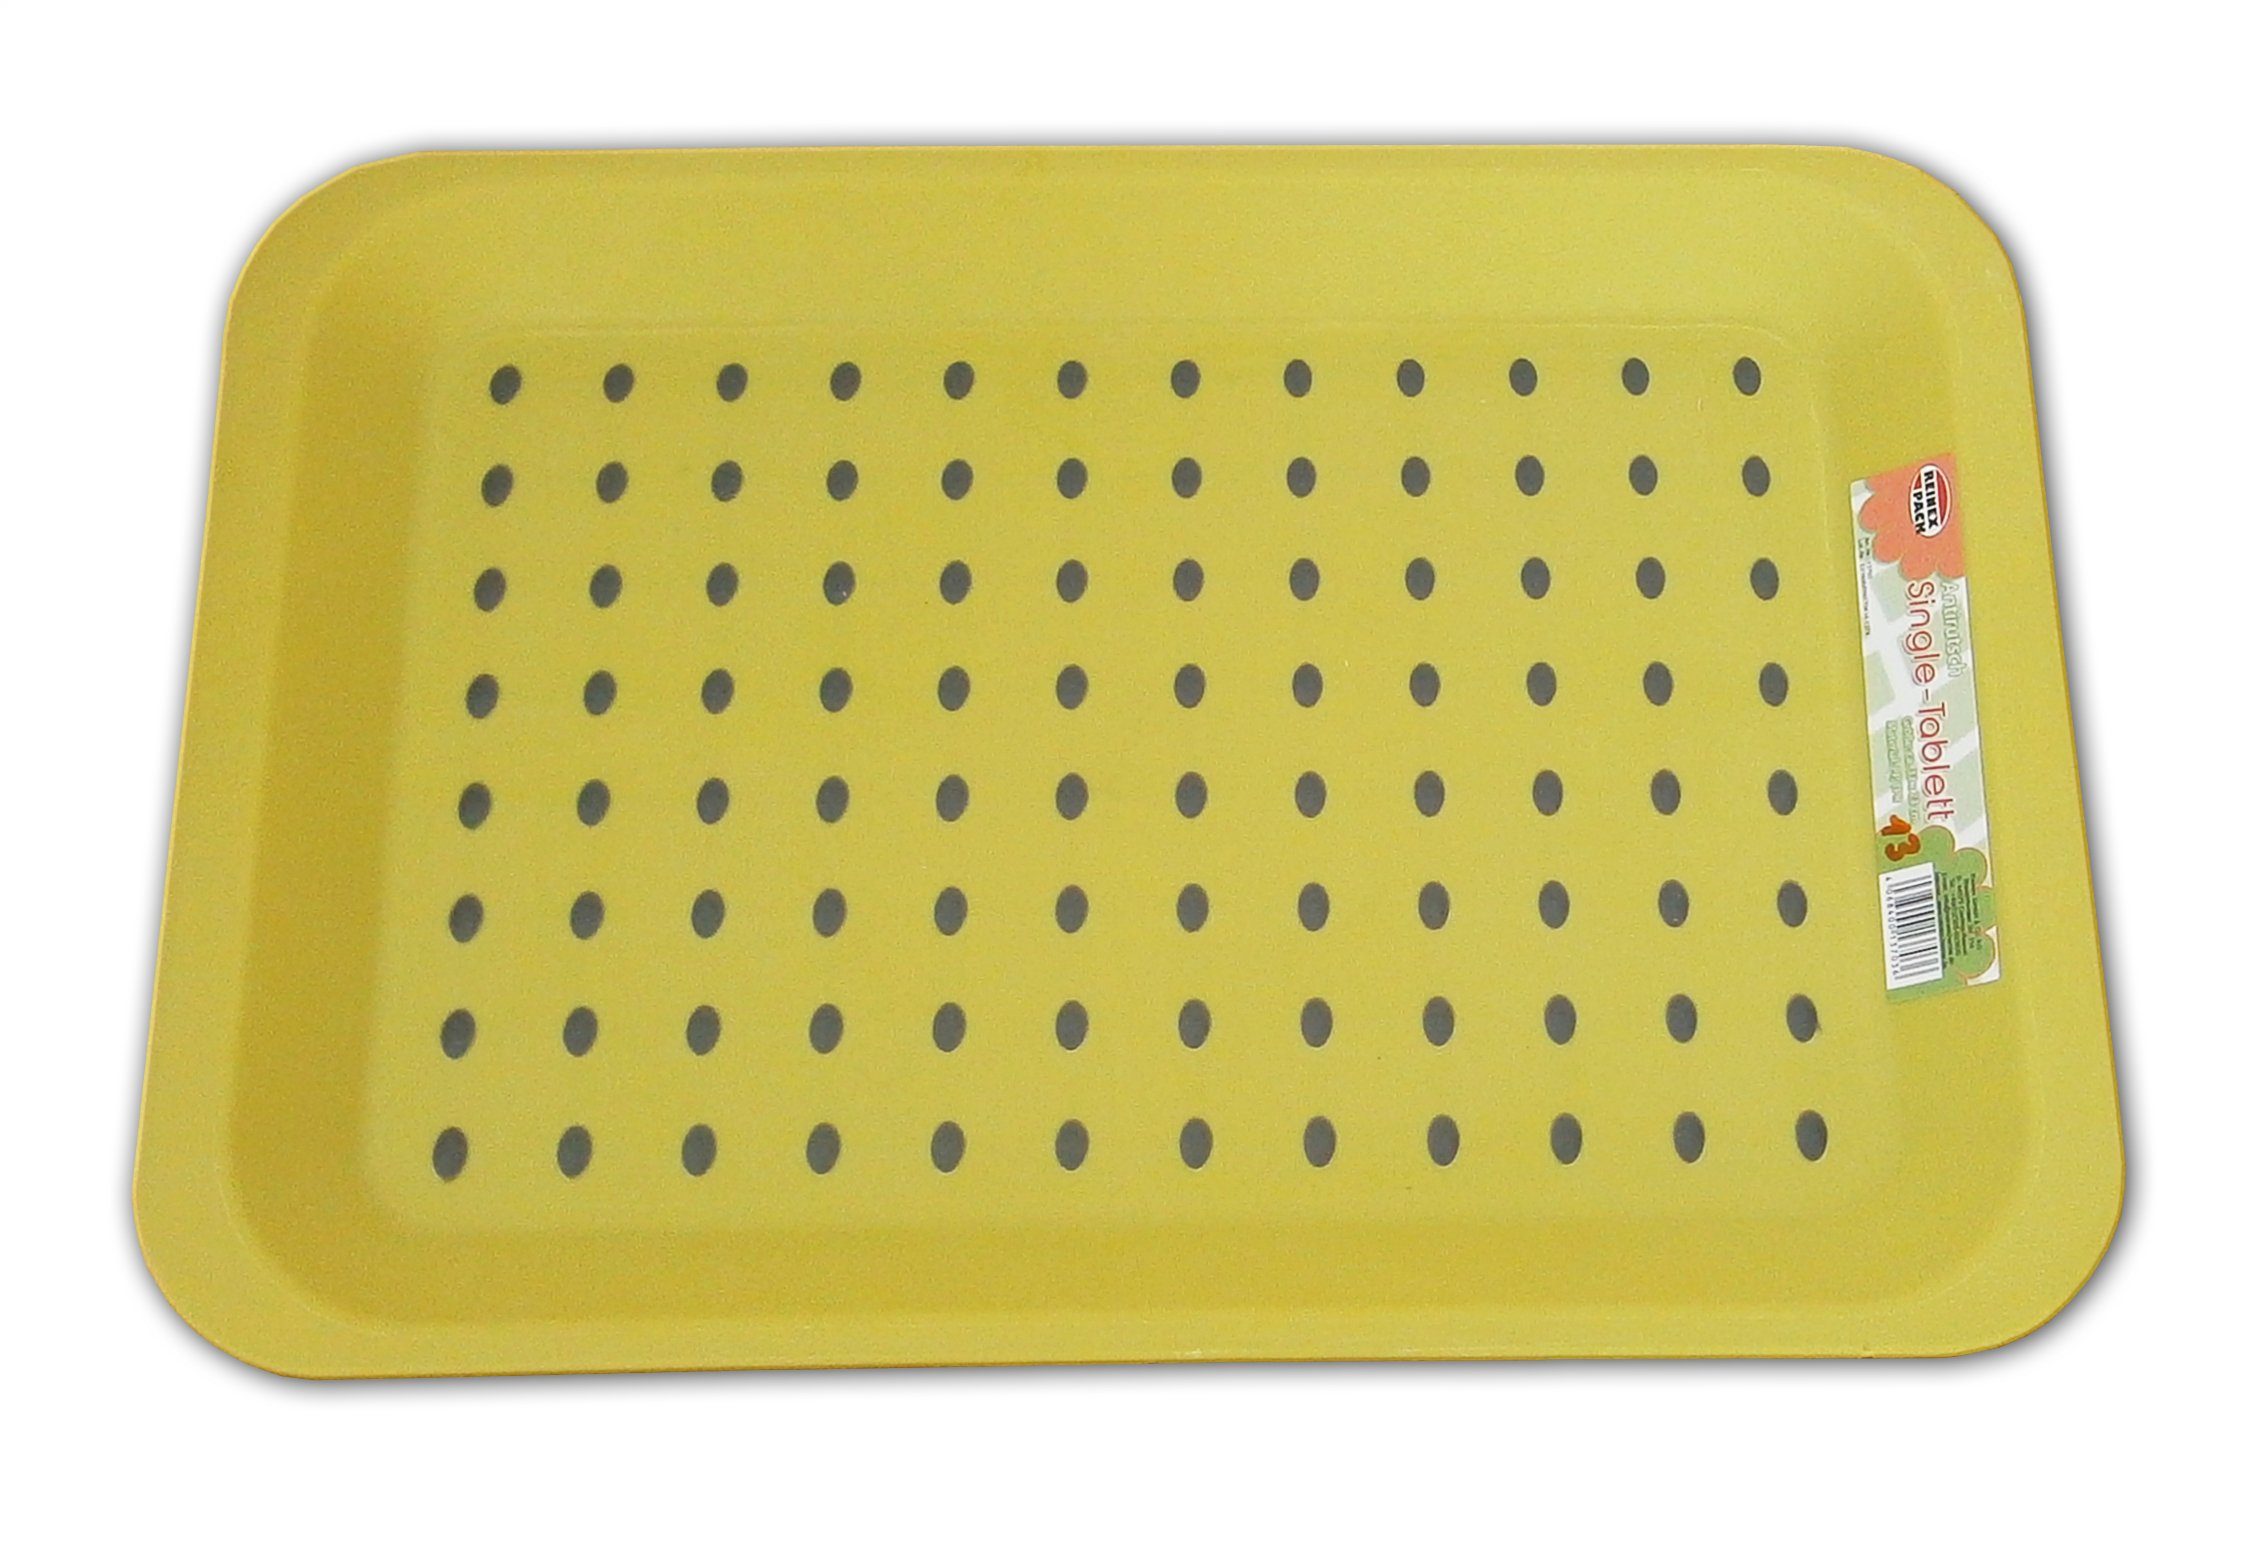 Reinex Tablett TABLETT mit Anti-Rutsch-Belag 33x23cm Kunststoff Grün Serviertablett Frühstückstablett 36 (Grün)